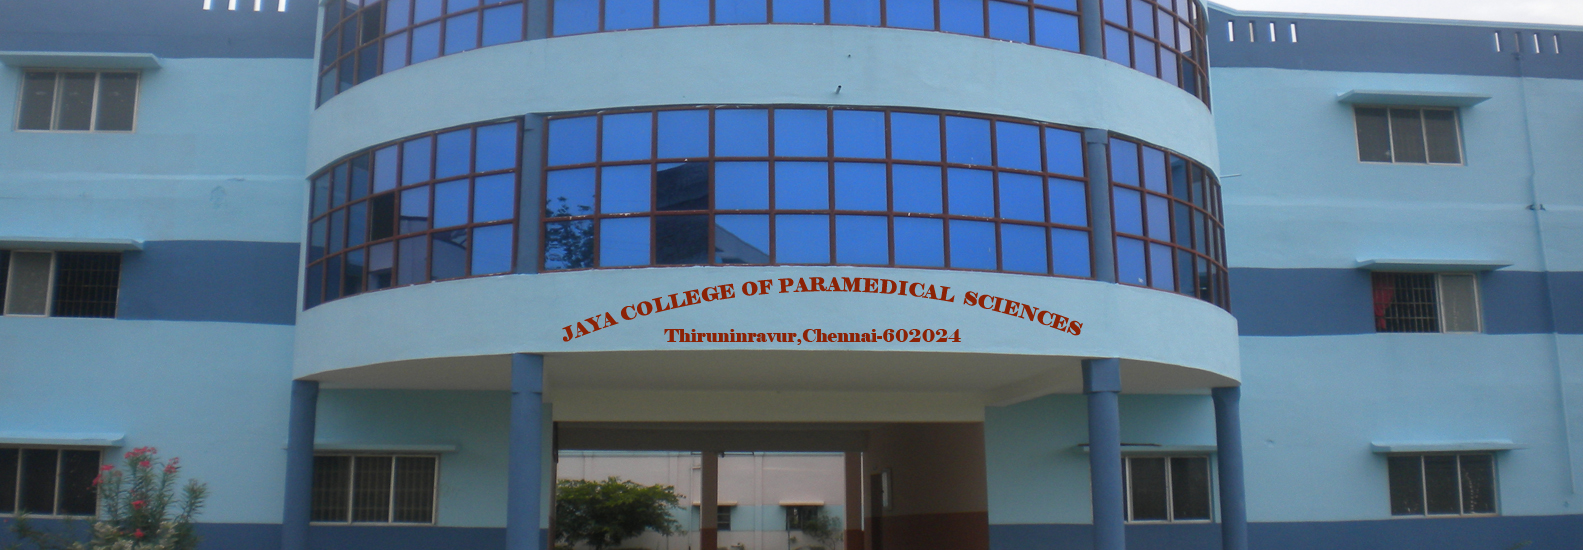 Jaya College of Pharmacy & Paramedical Sciences